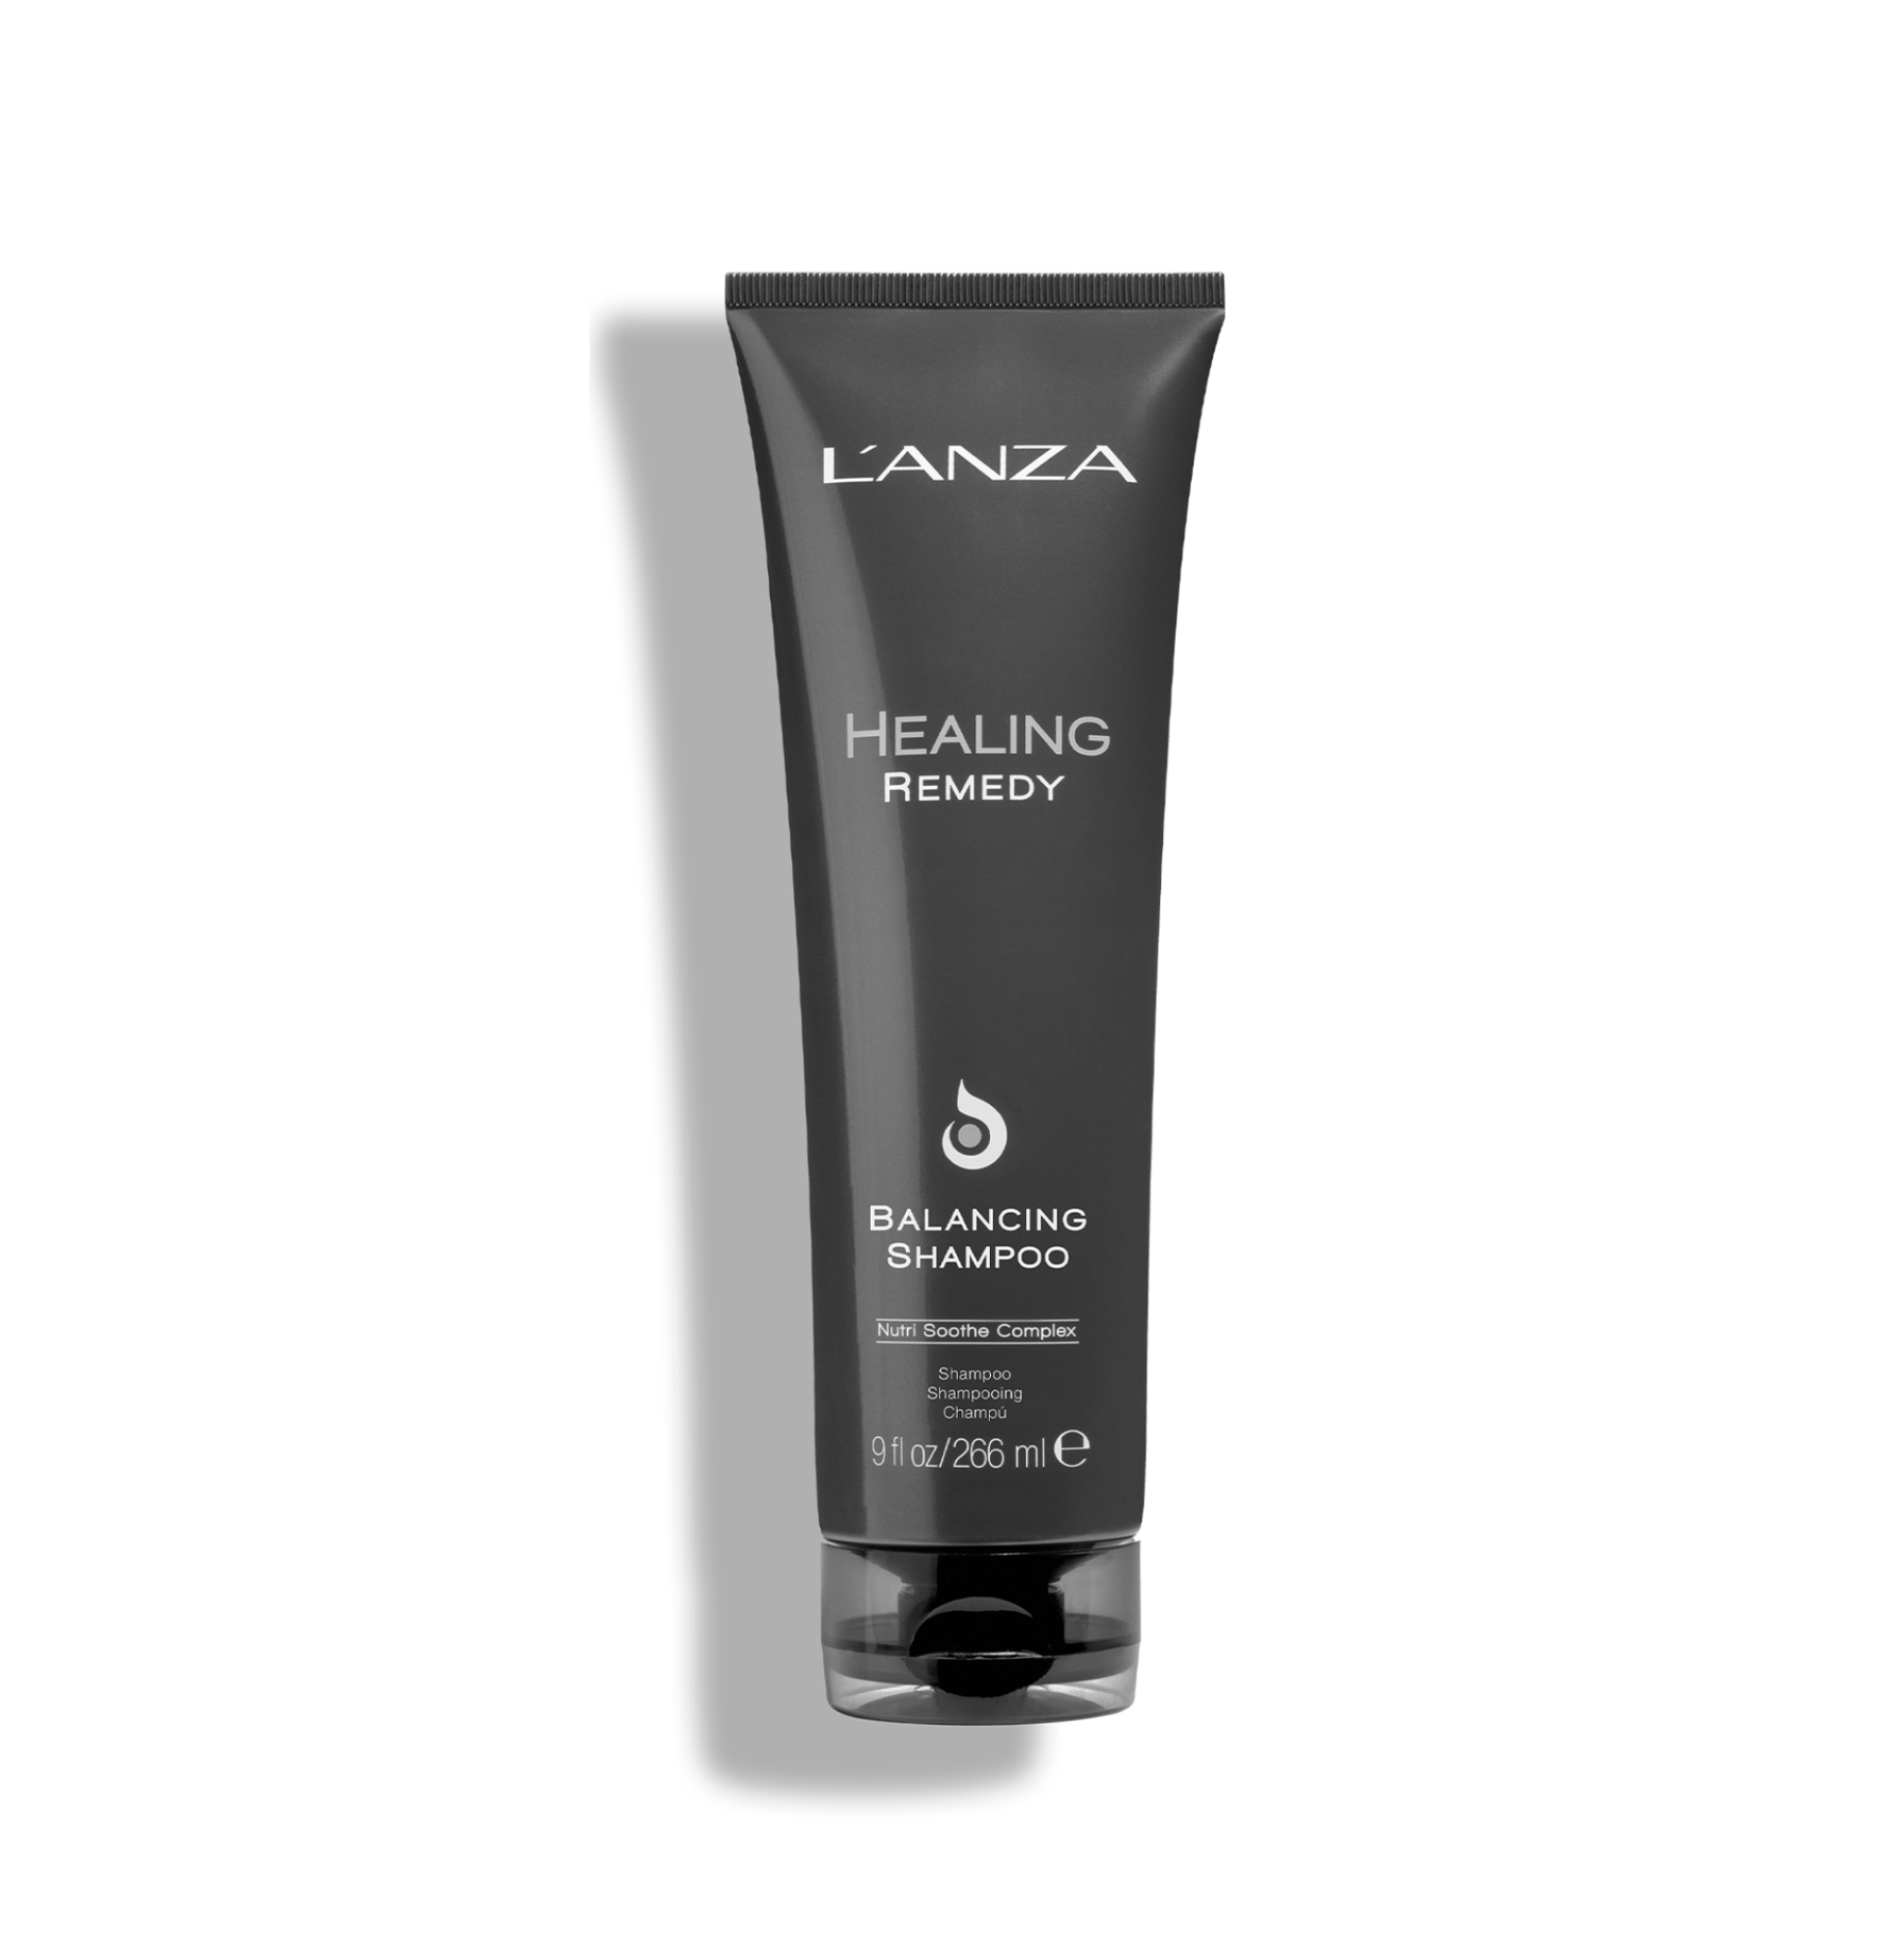 Scalp Balancing Shampoo Healing Remedy | L'ANZA